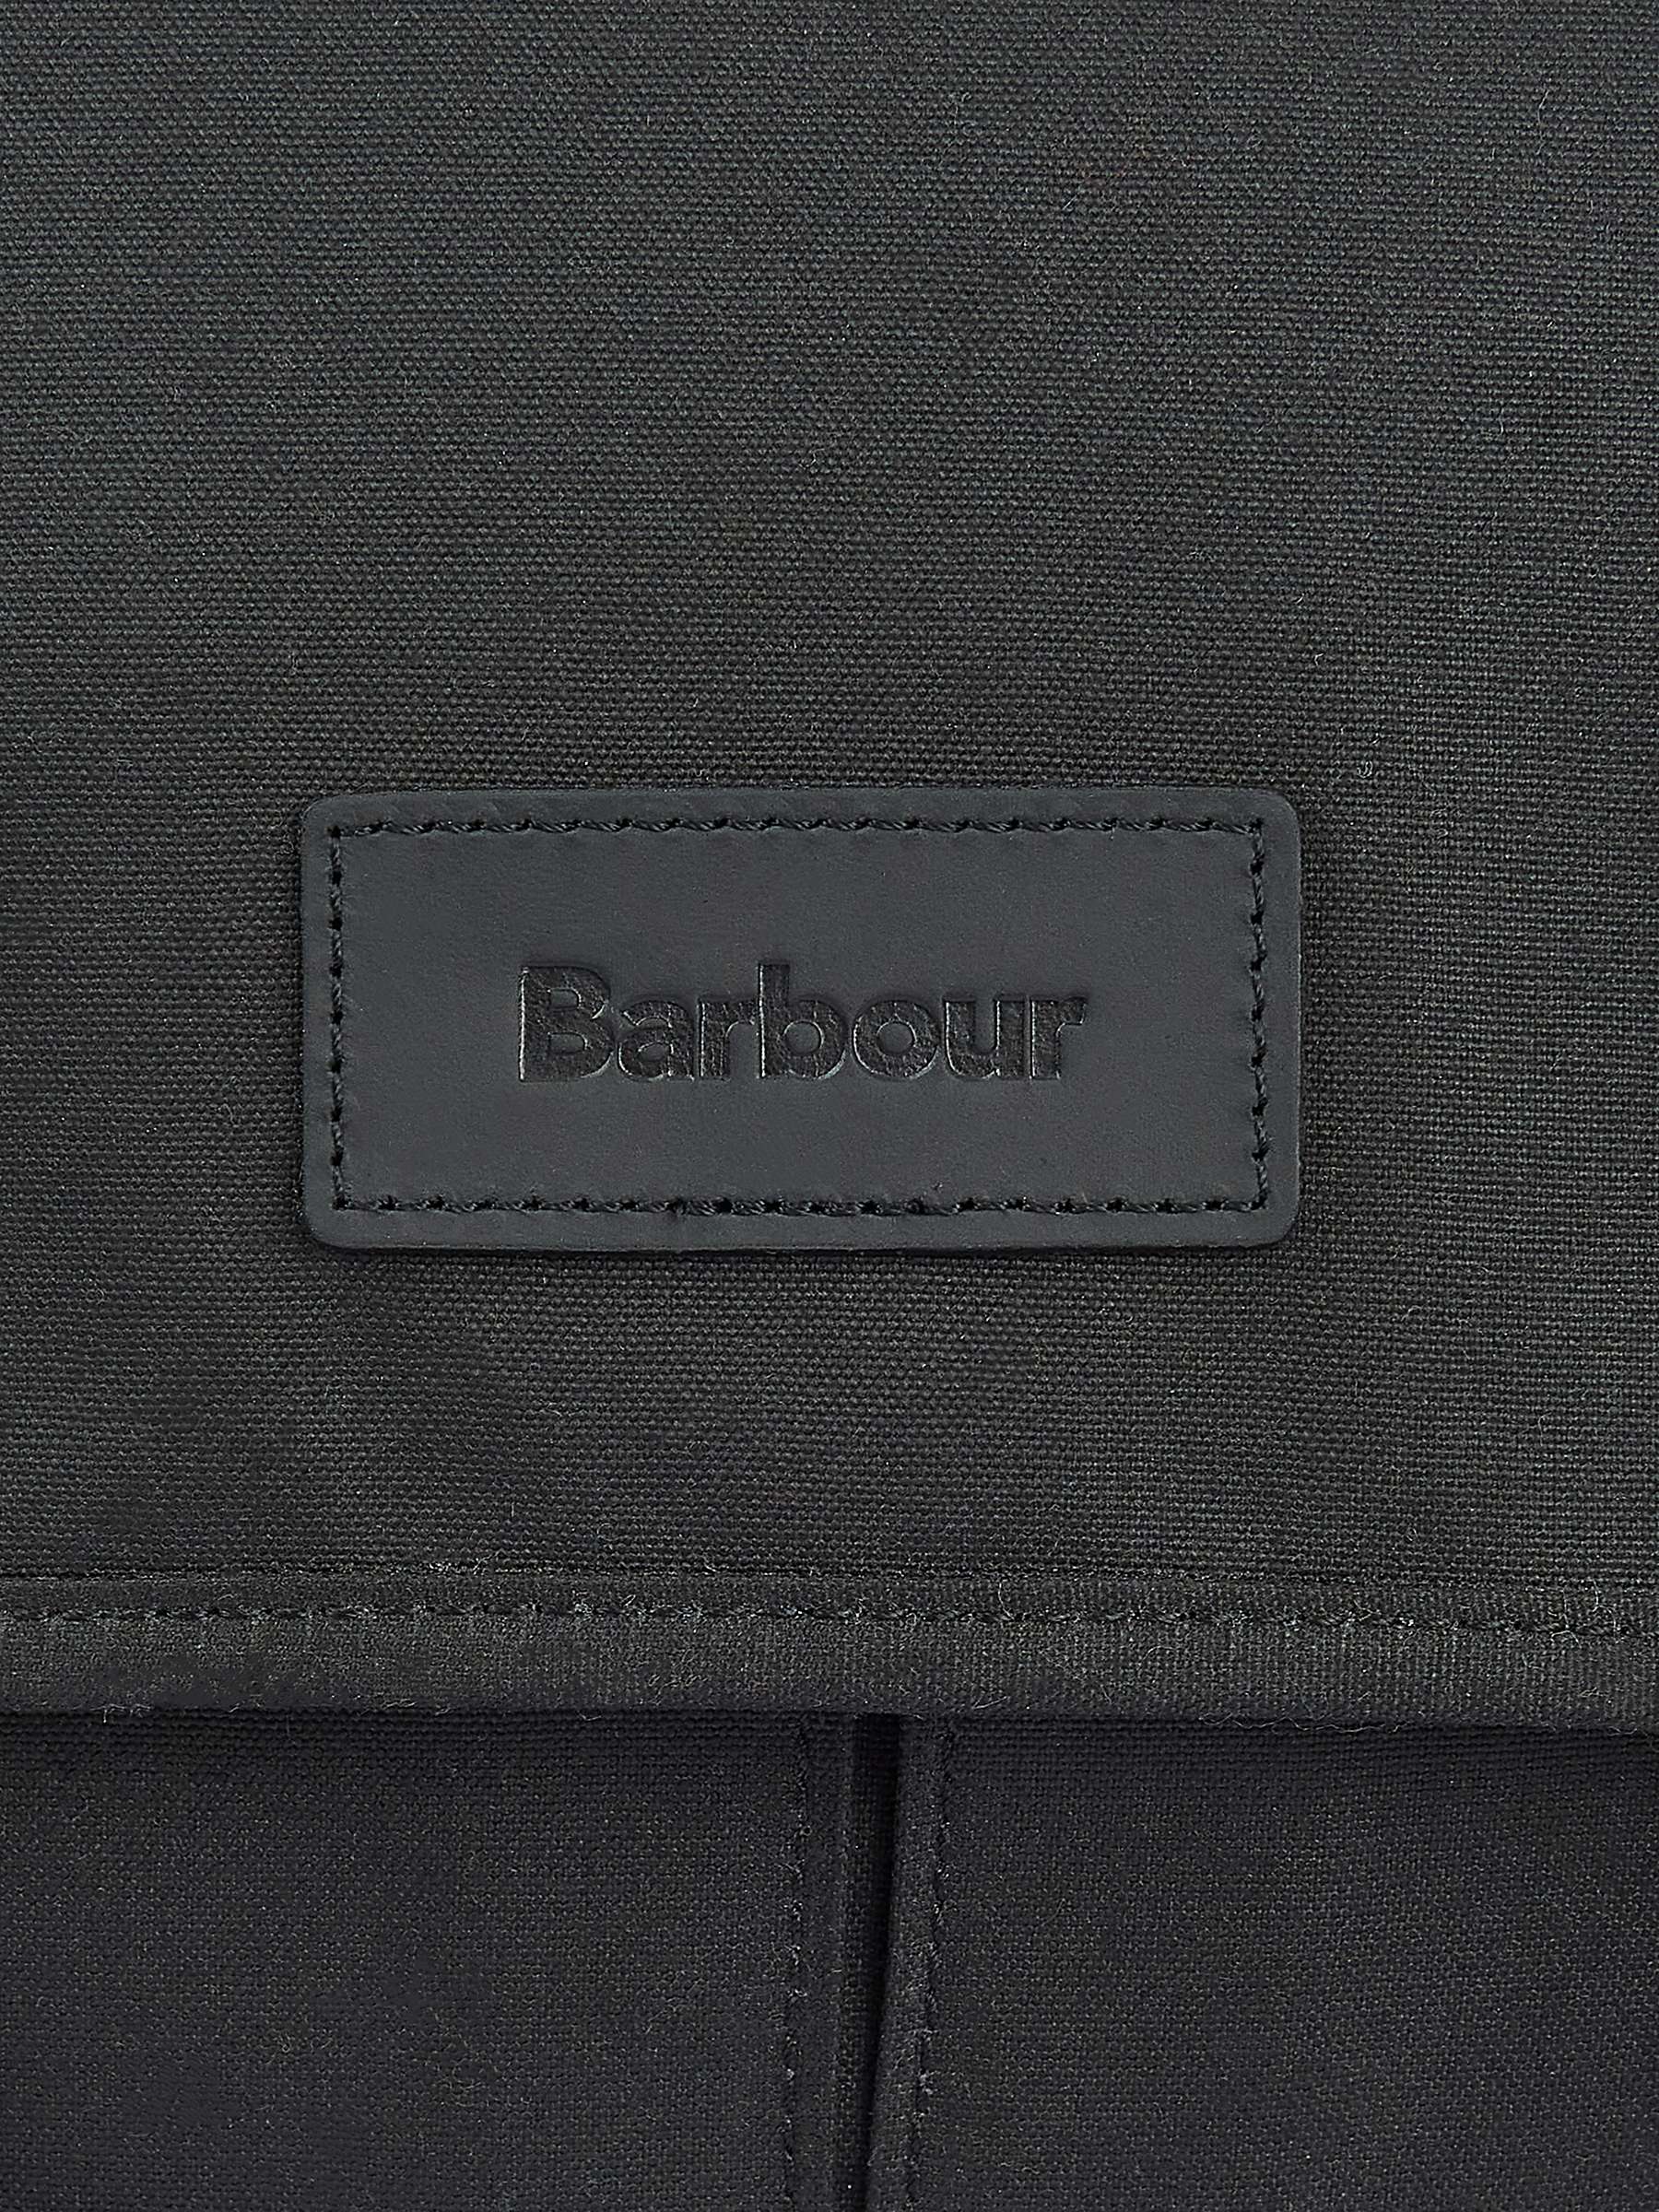 Buy Barbour Essential Wax Messenger Bag Online at johnlewis.com